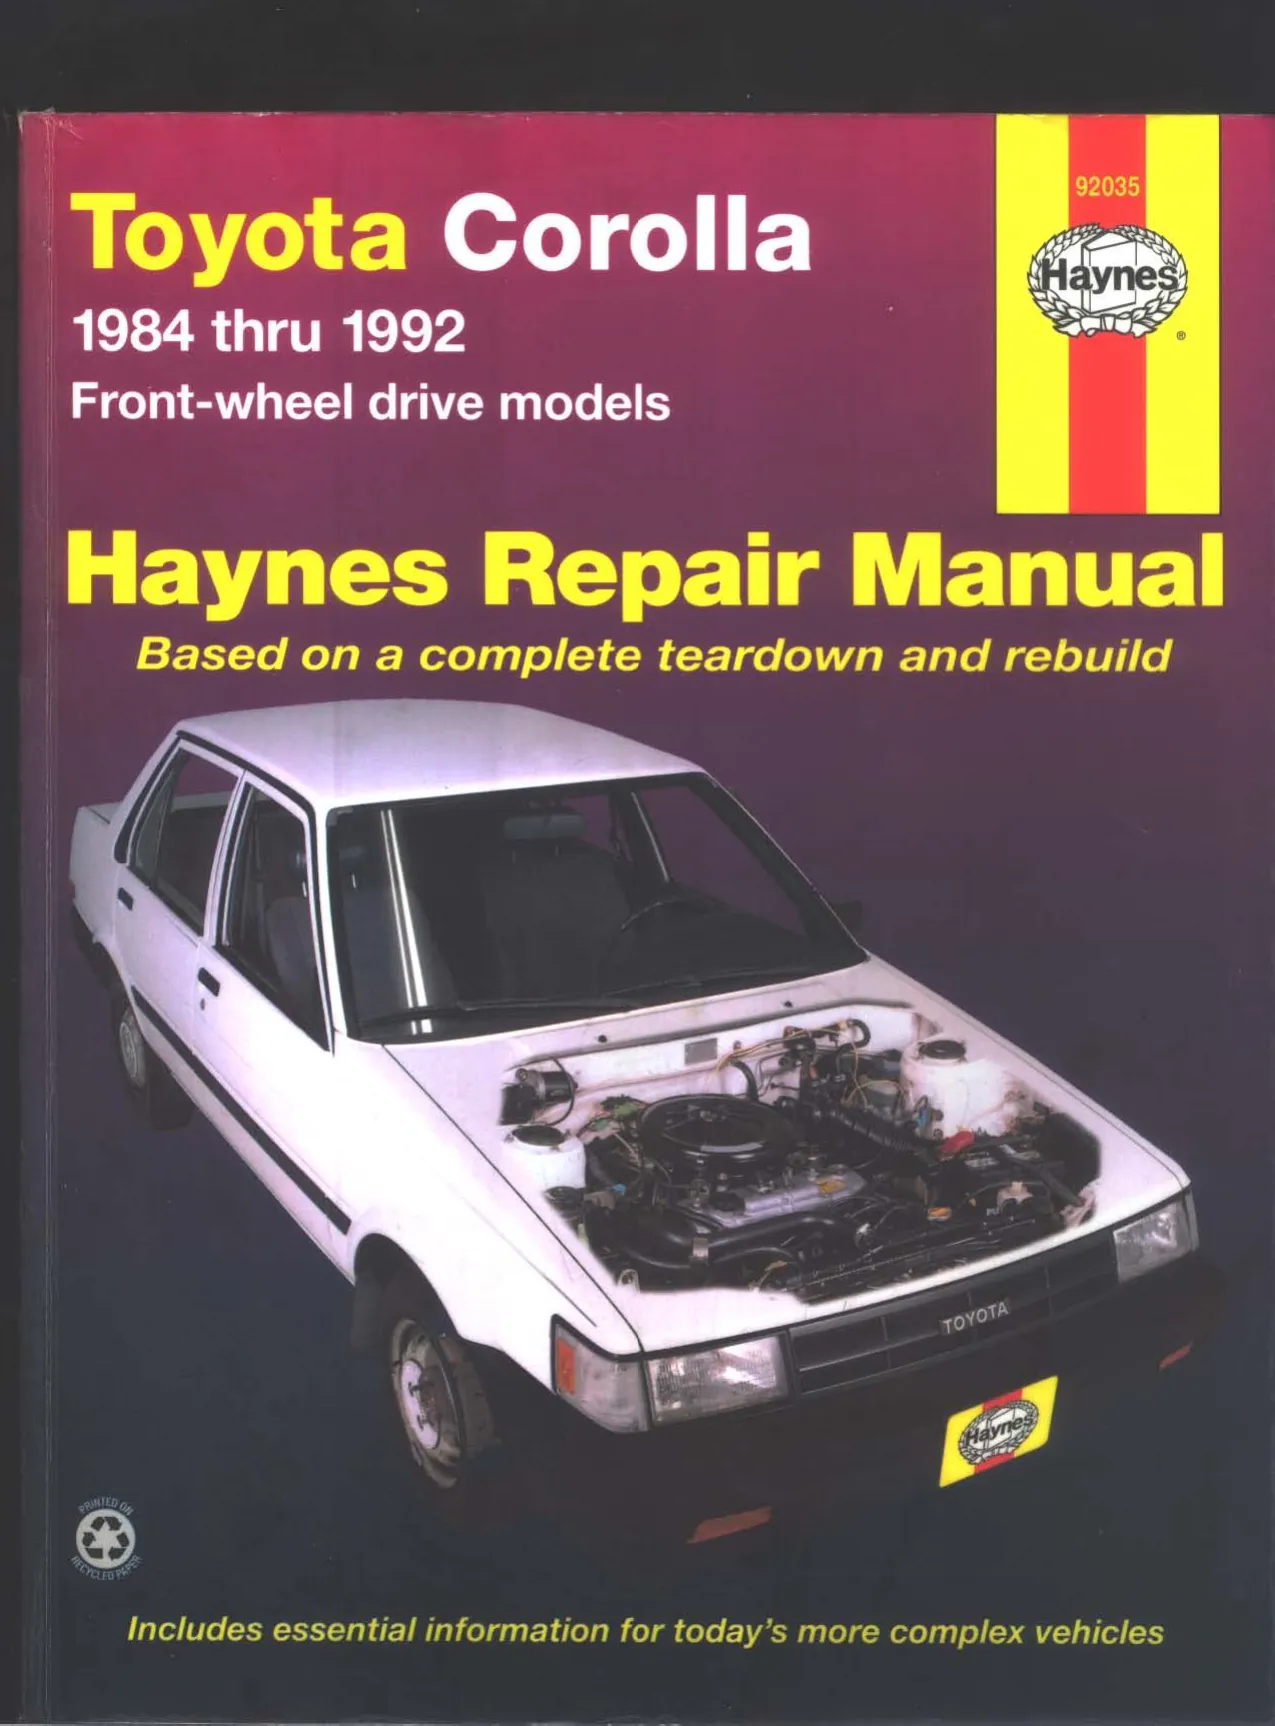 1984-1992 Toyota Corolla shop manual